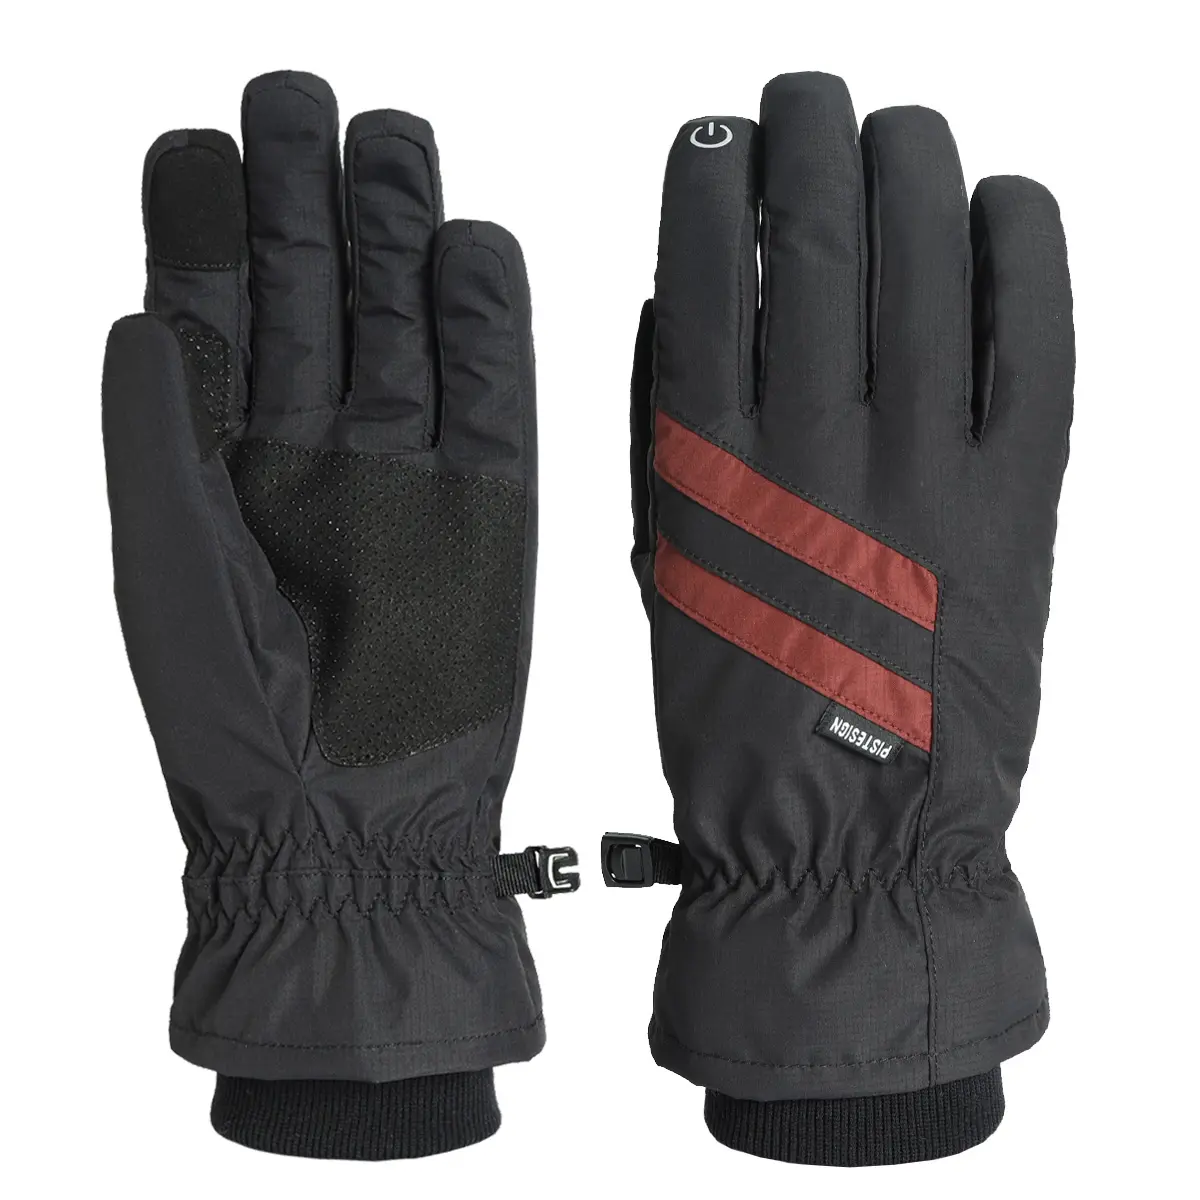 Gloves for Bike Riding Custom Sport Gloves Touchscreen Hiking and Trekking Gloves Water Resistant